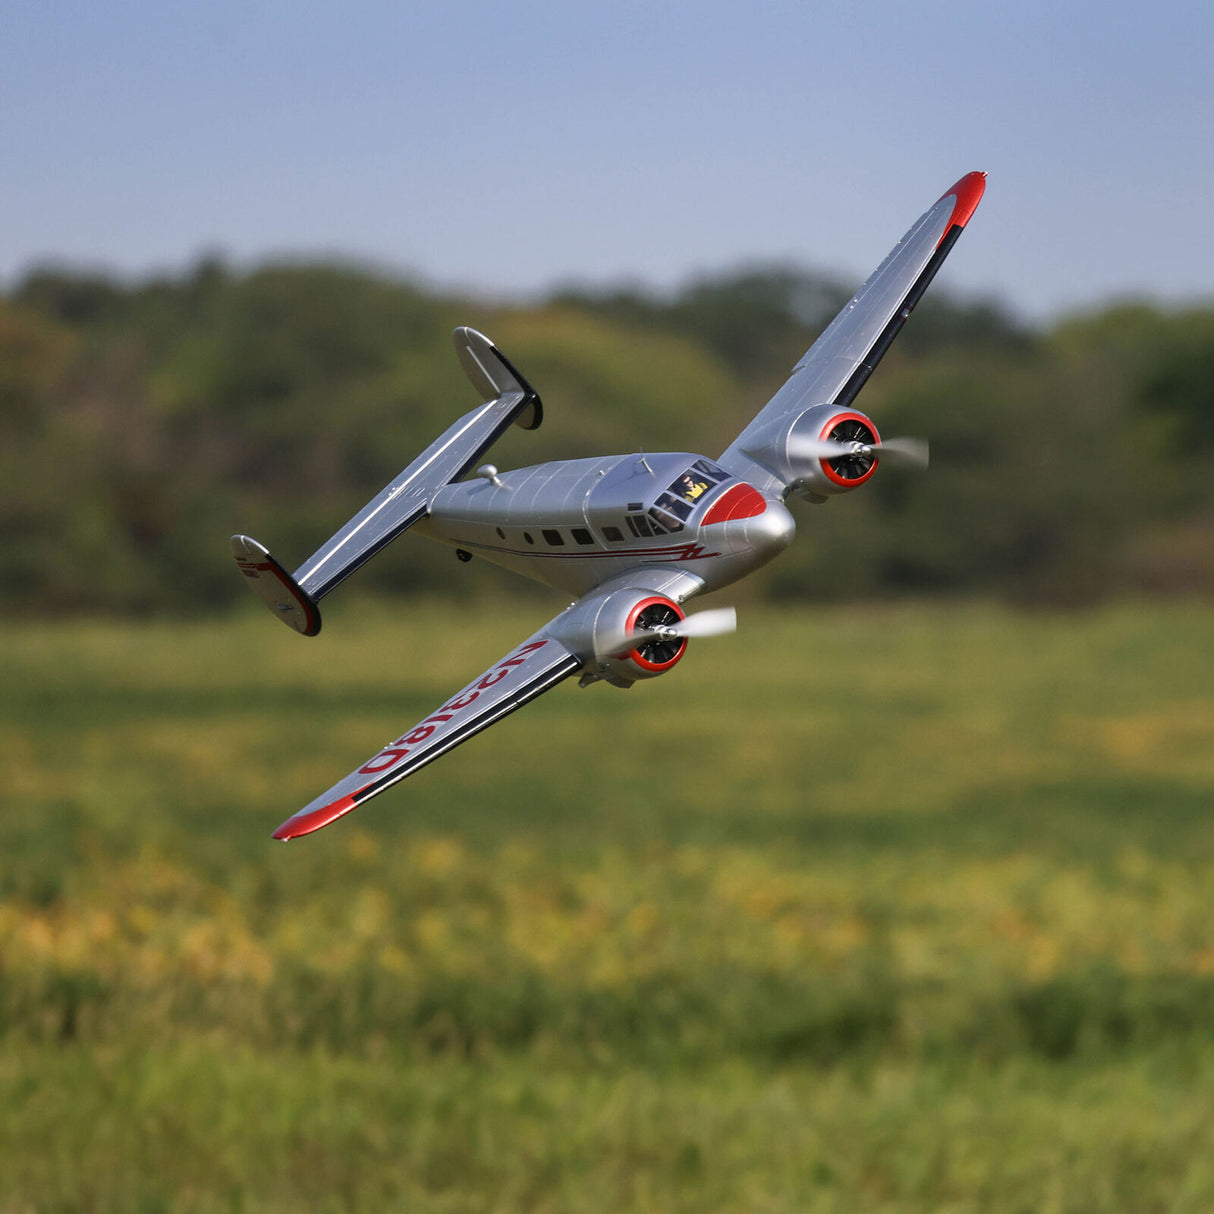 E-Flite Twin Beech D18 1.5m RC Plane, BNF Basic - Hobbytech Toys